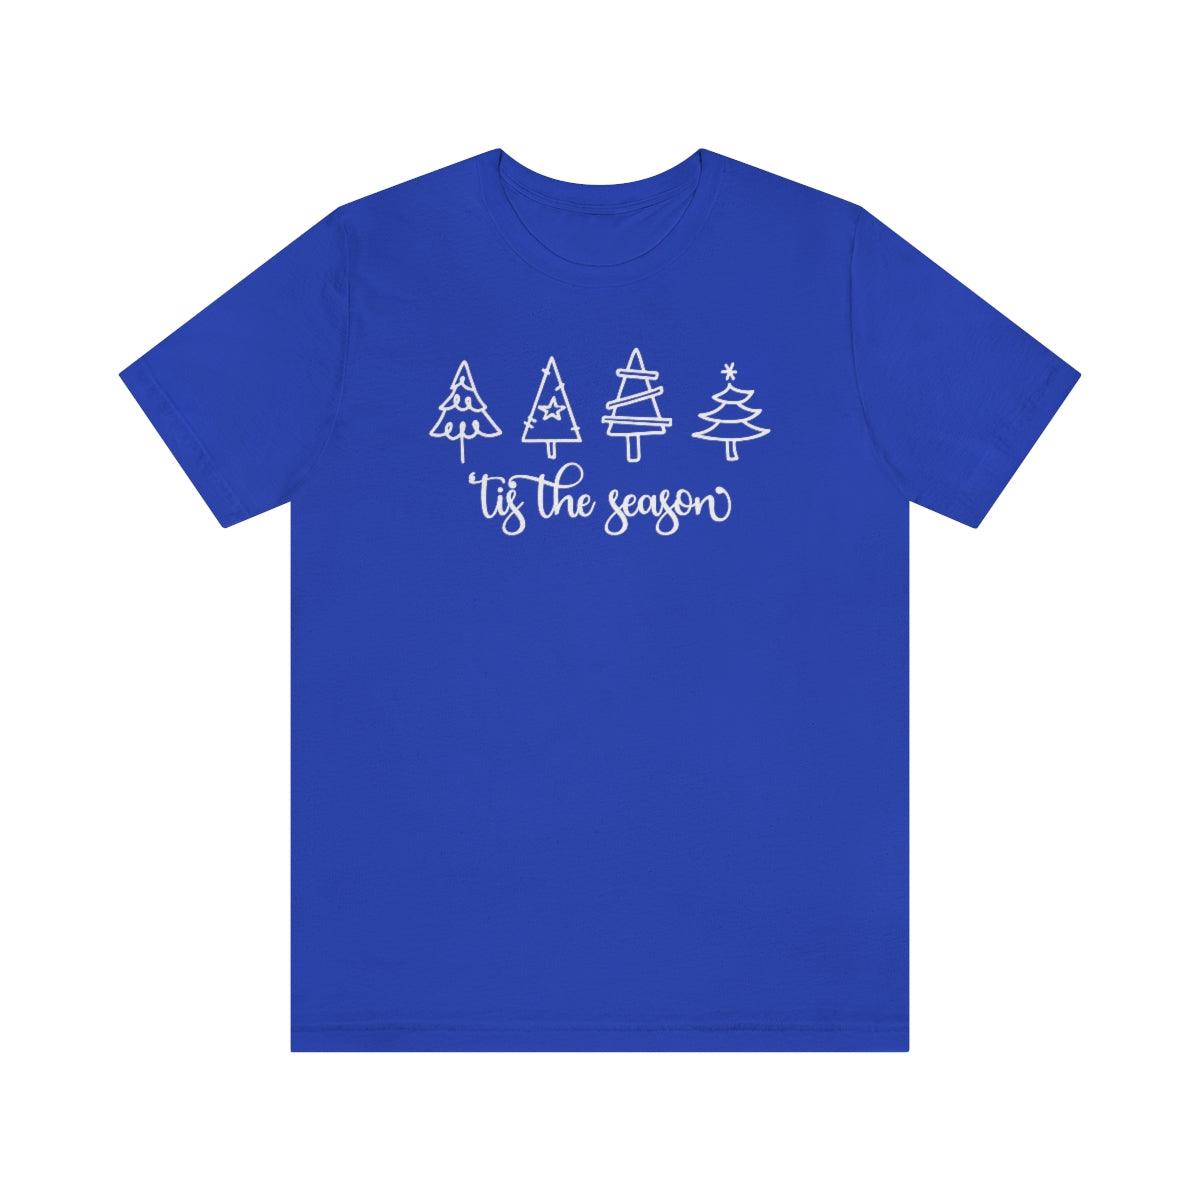 Tis The Season Trees Christmas Shirt Short Sleeve Tee - Crystal Rose Design Co.